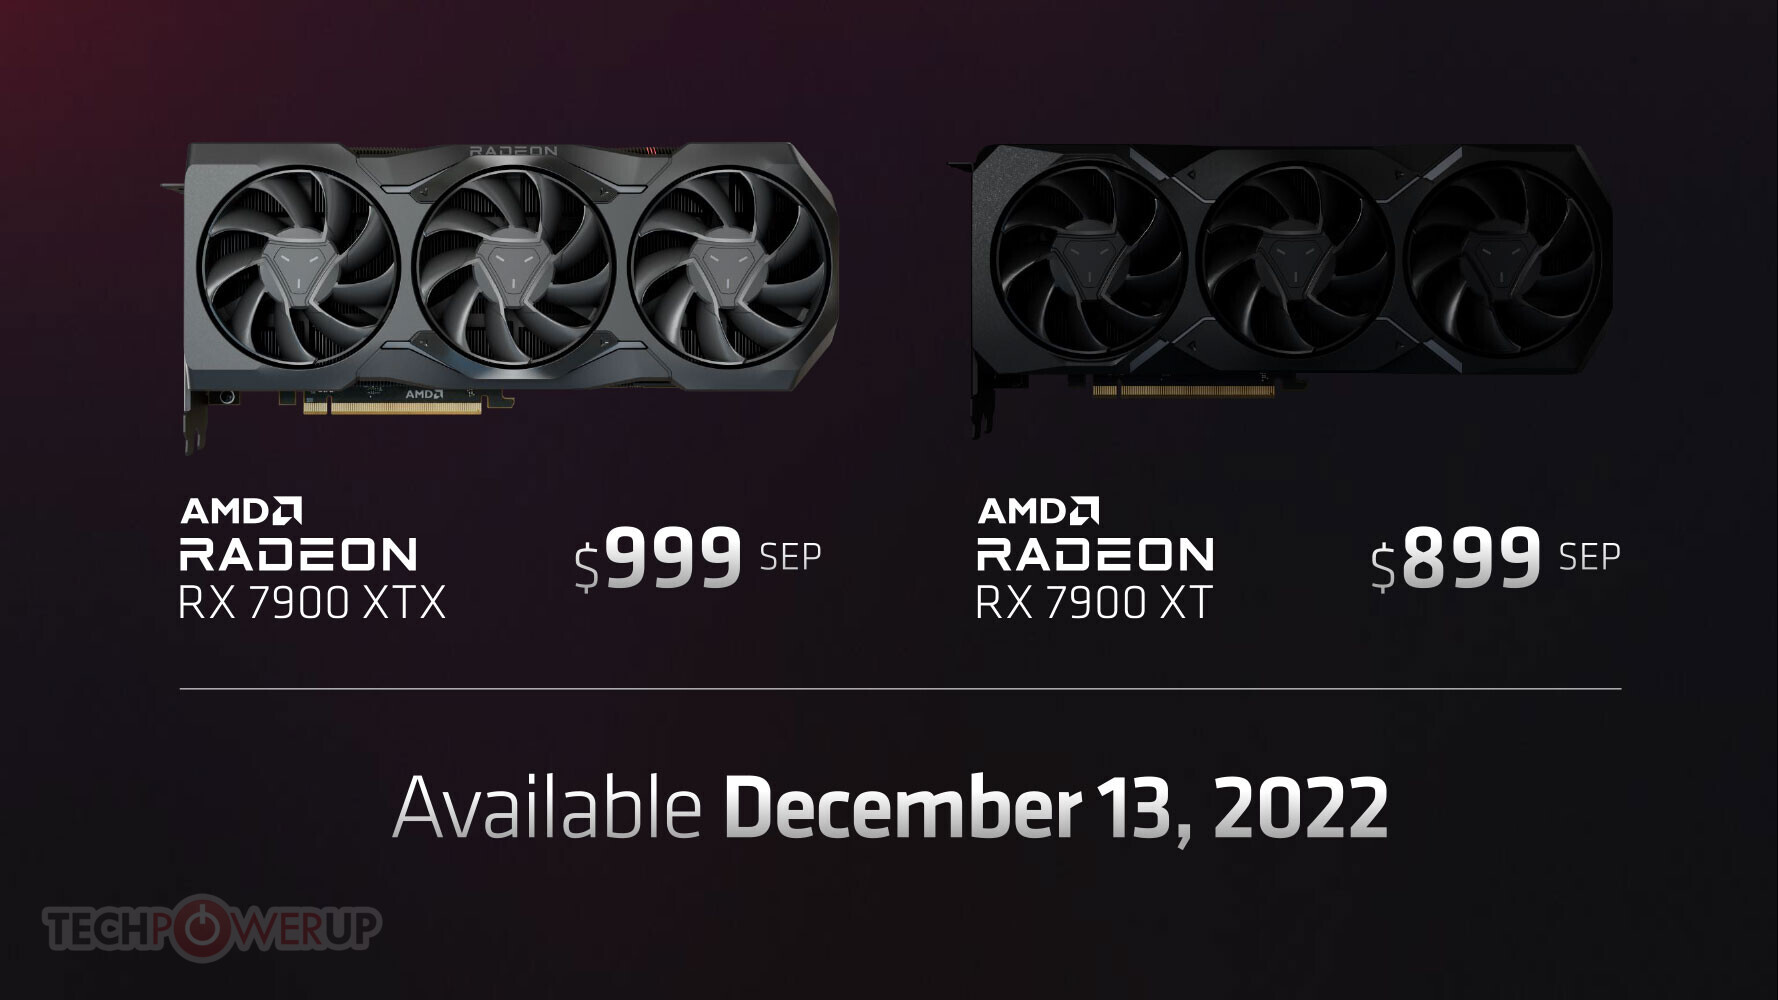 GIGABYTE Radeon RX 6800 XT AORUS MASTER debuts for $899